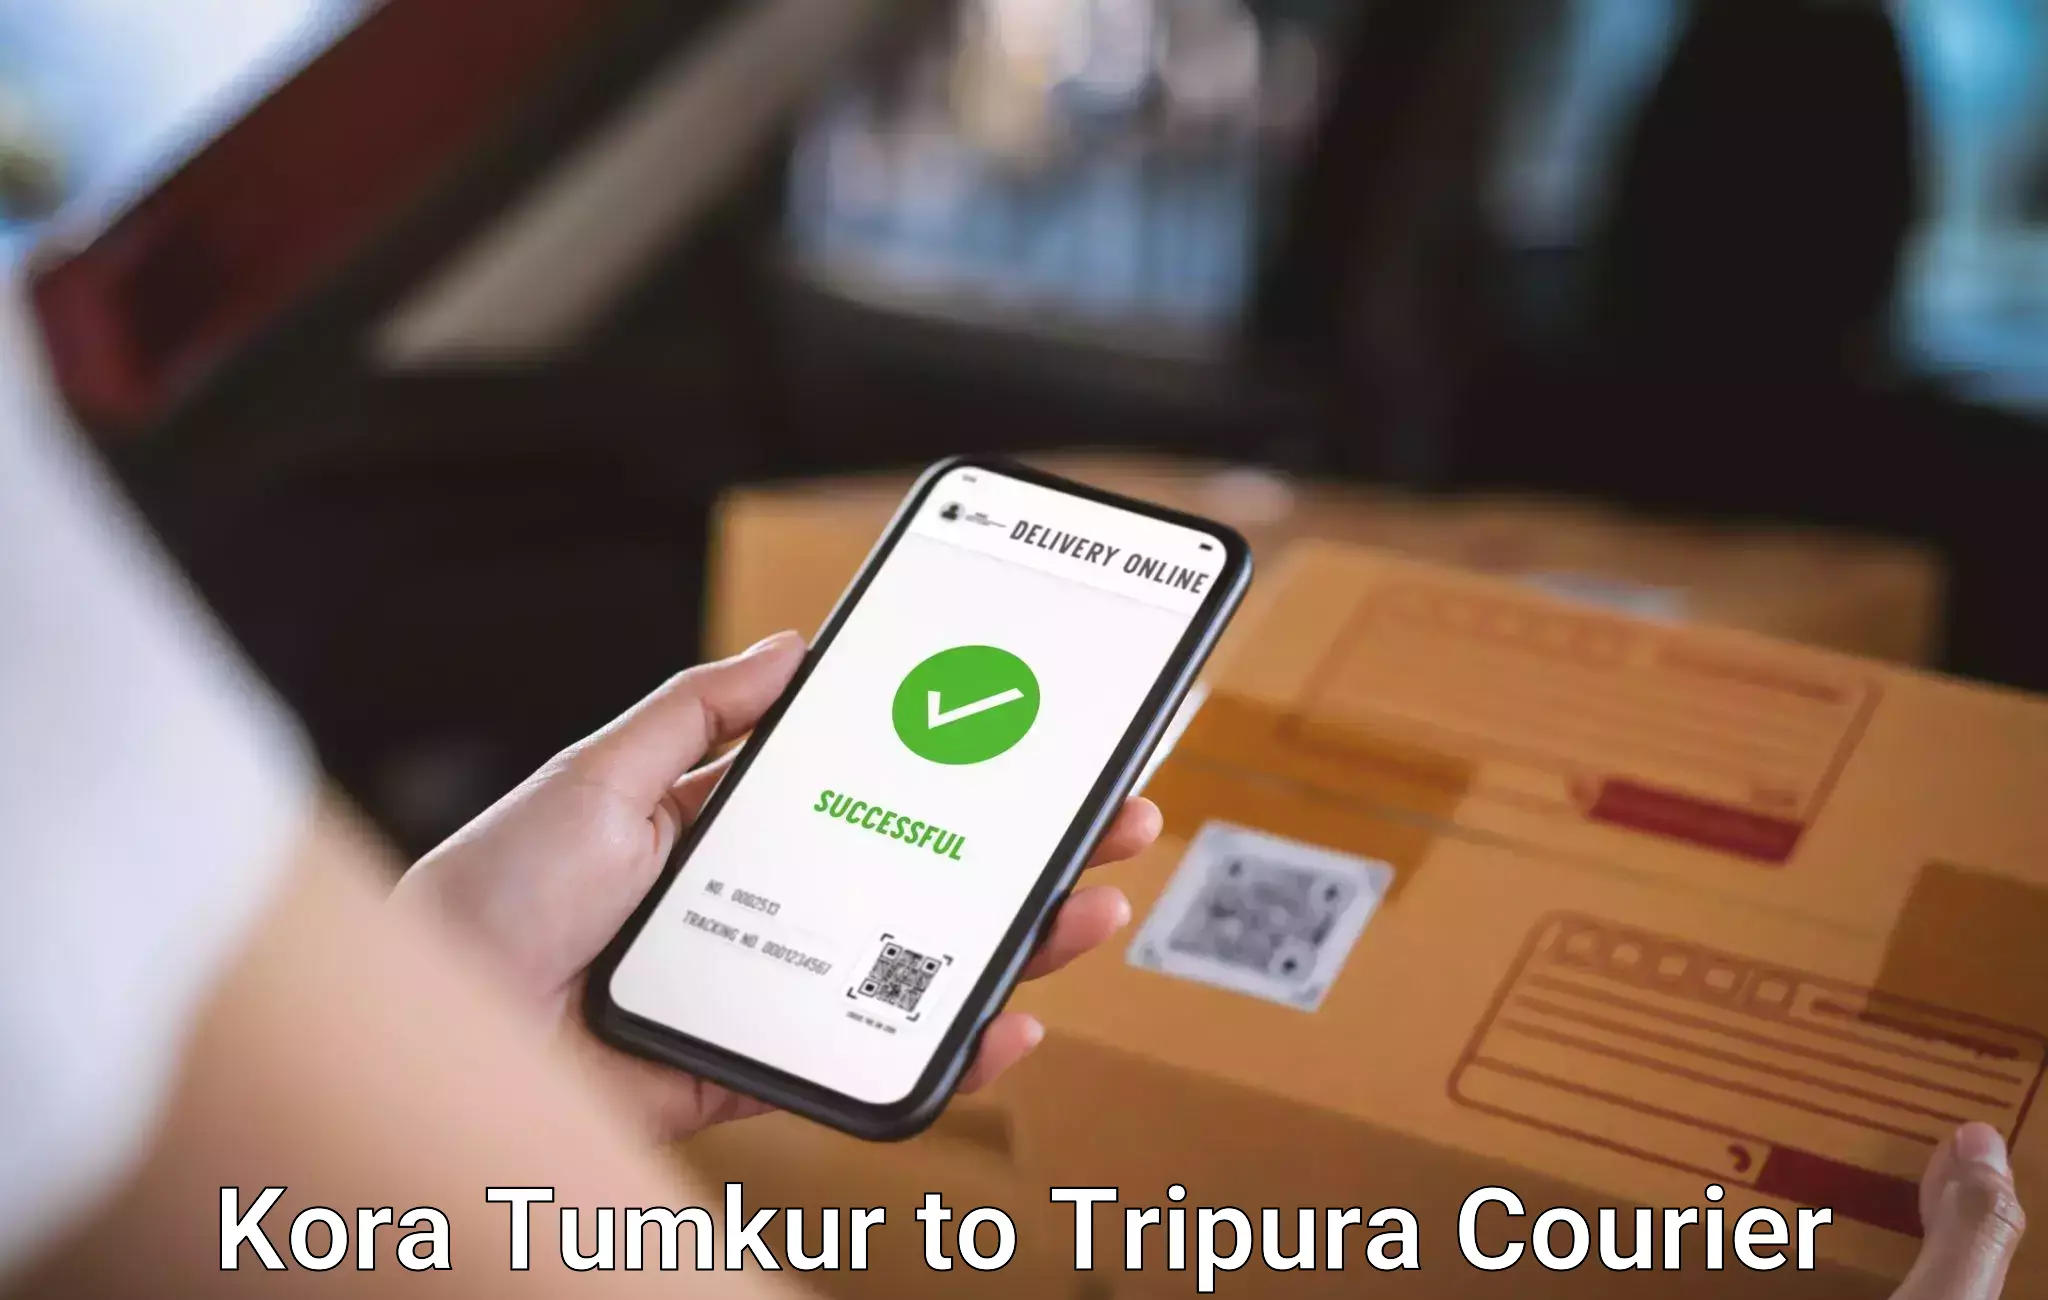 Hassle-free luggage shipping Kora Tumkur to Udaipur Tripura